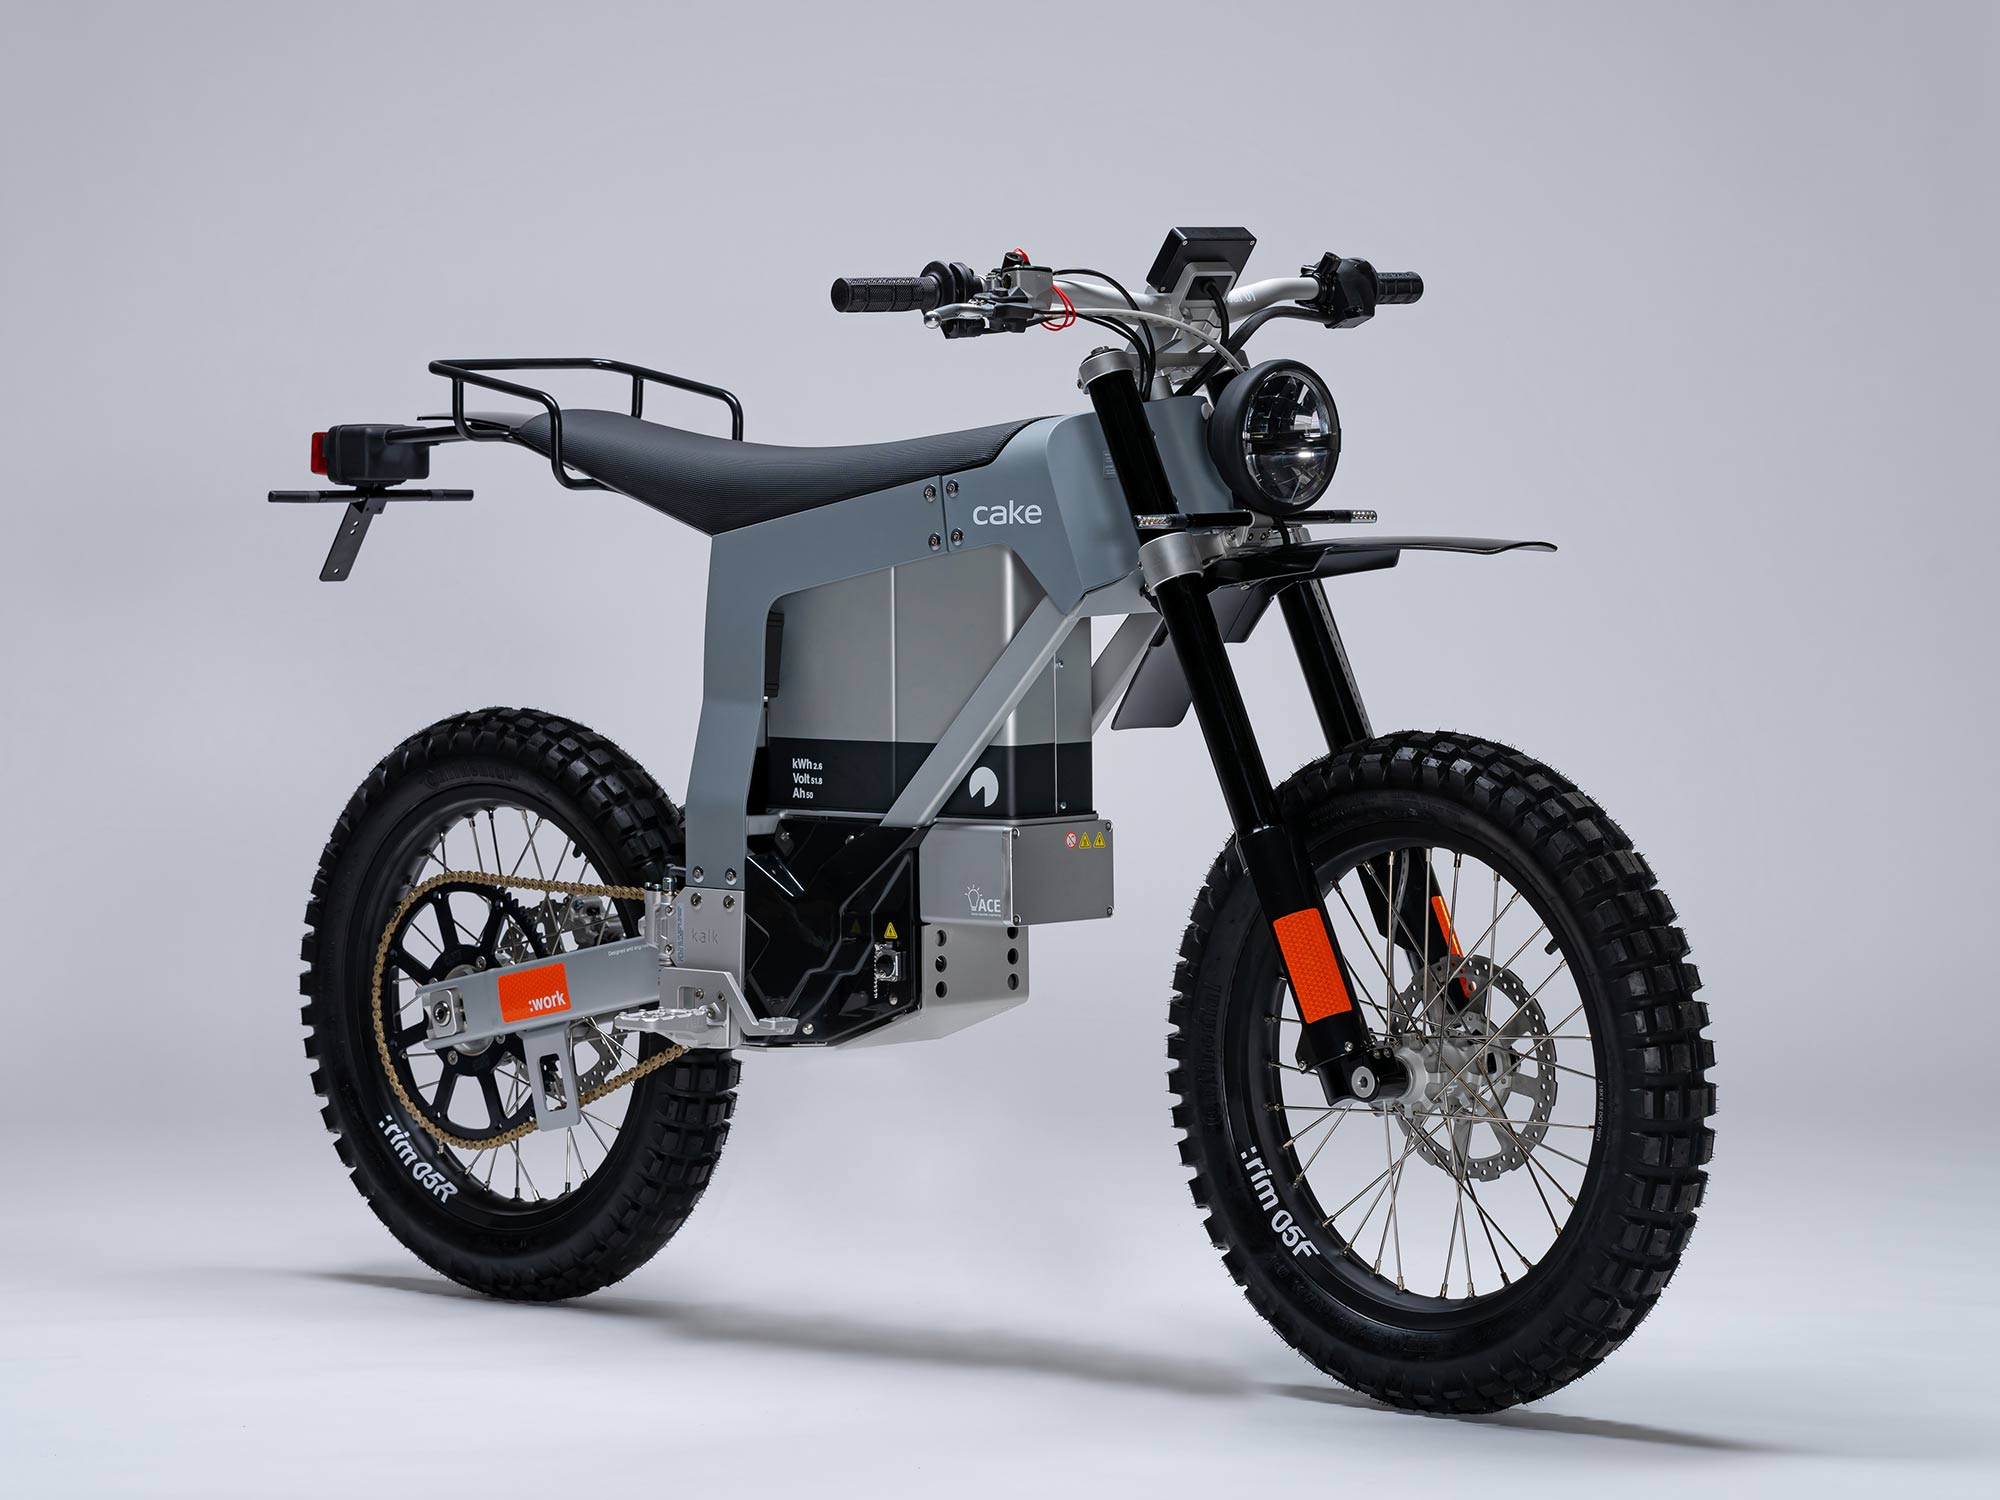 Kalk AP Anti-Poaching Electric Motorcycle by CAKE | Field Mag